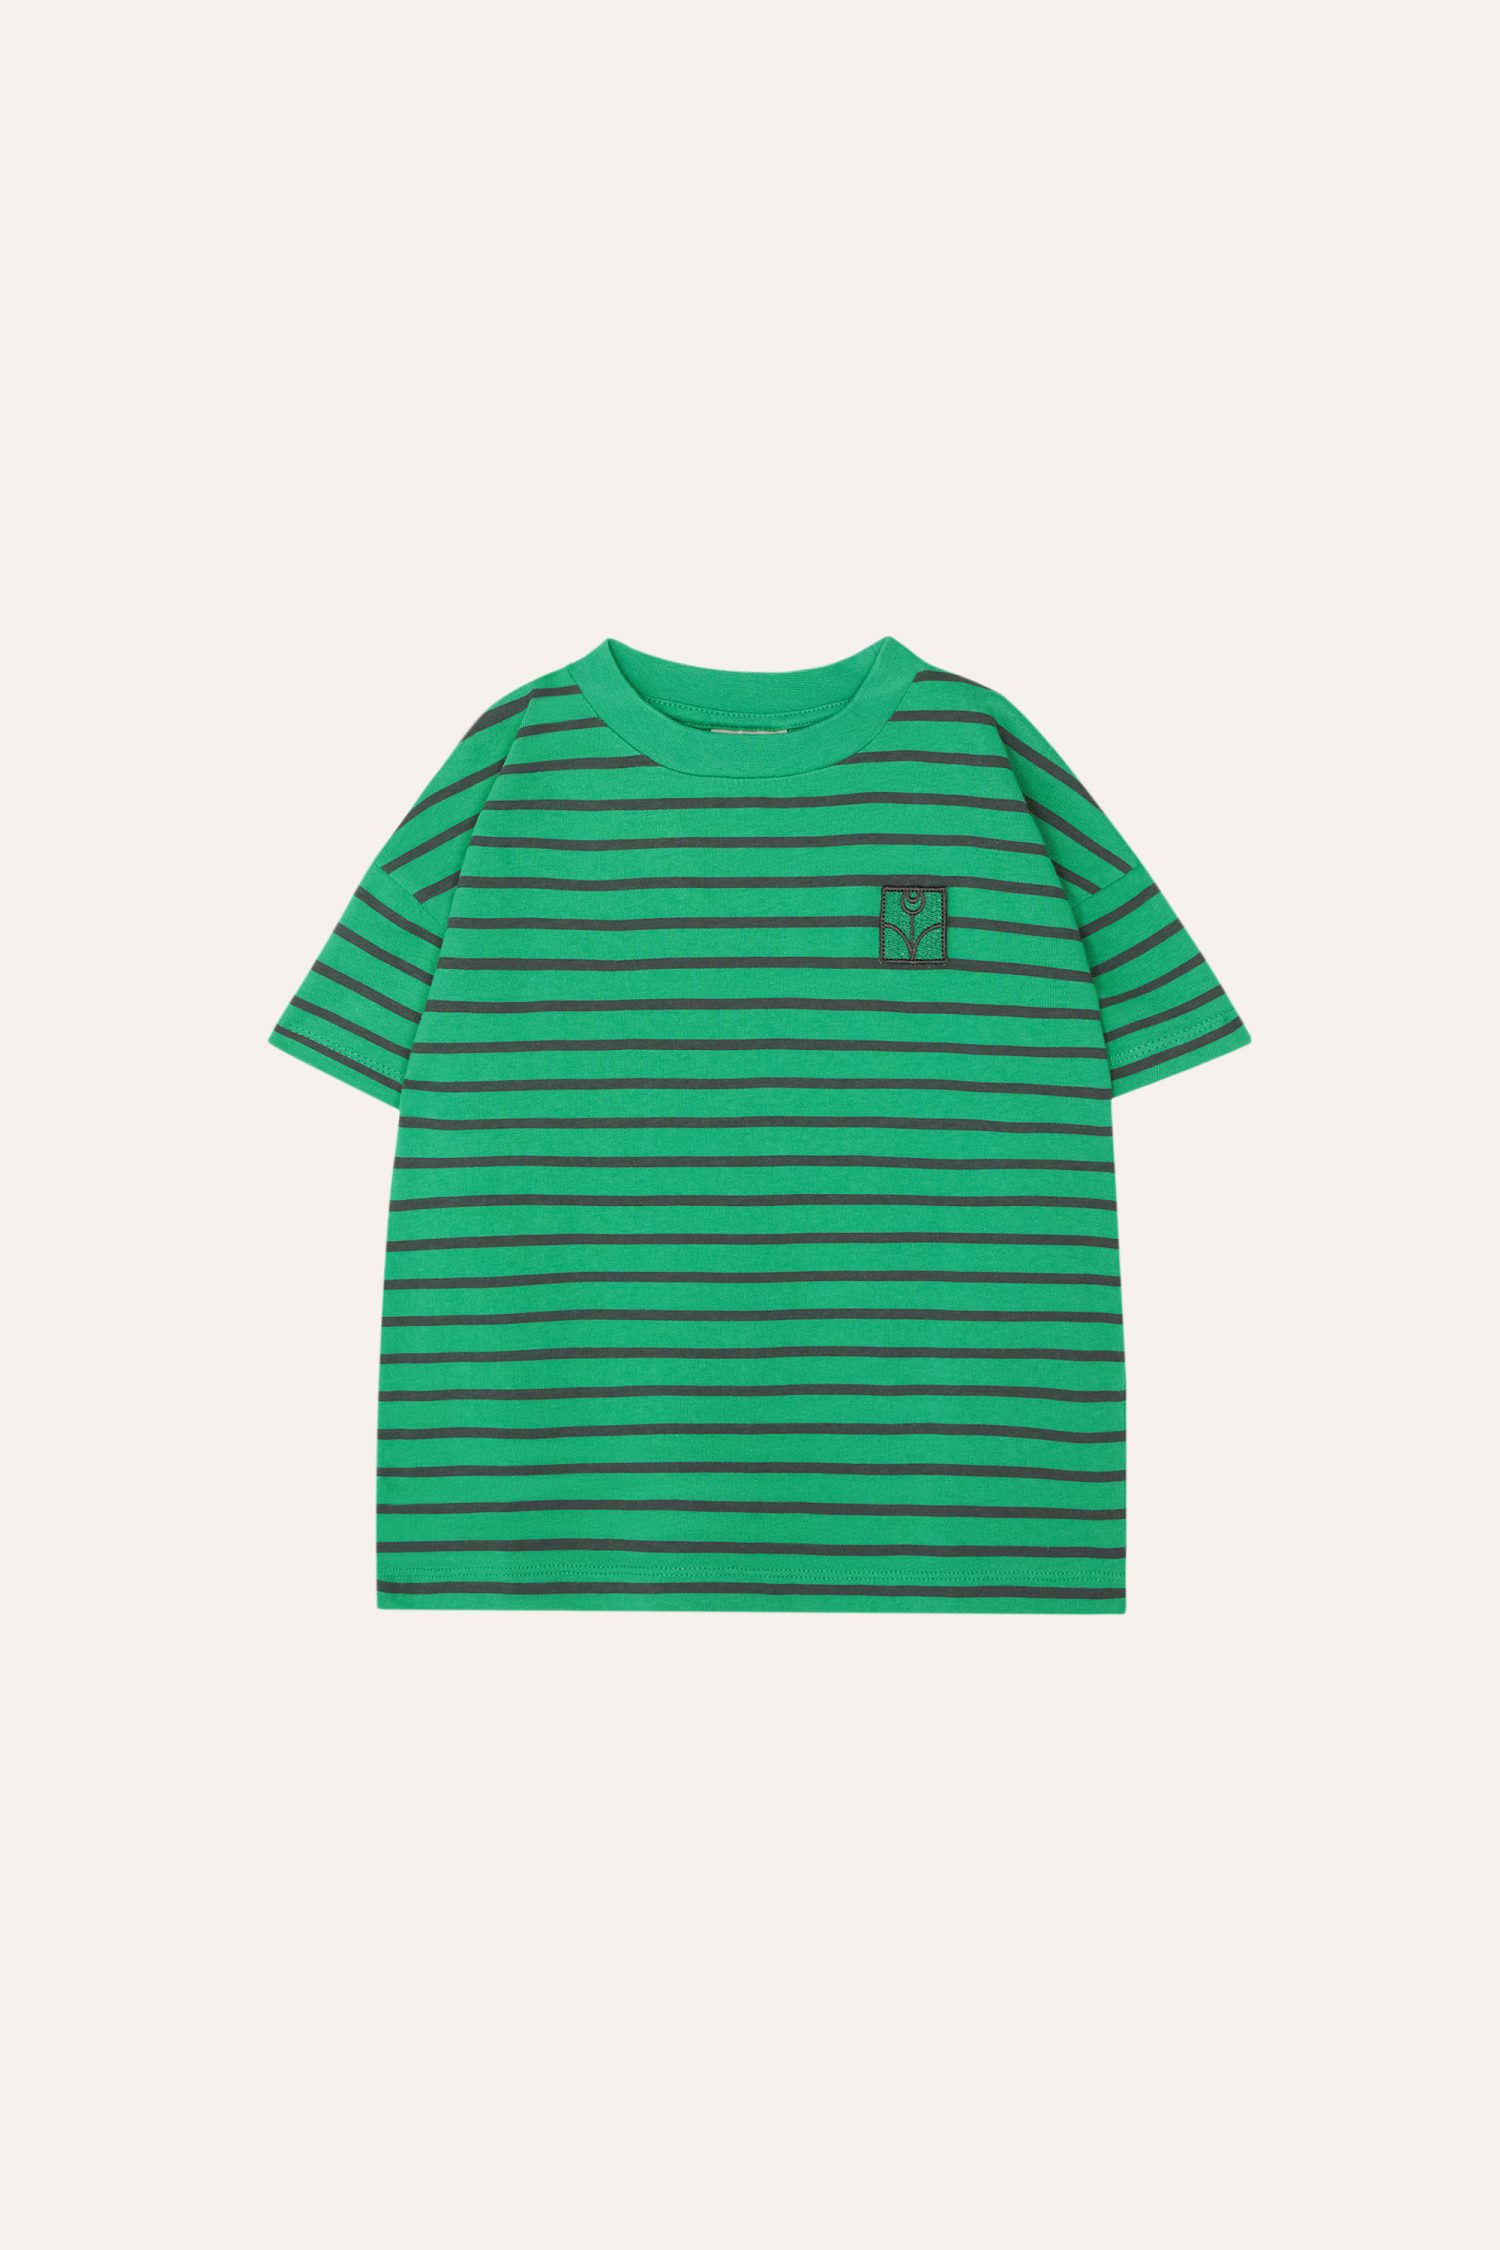 Buy Green Striped Kids Tshirt Online - The Campamento